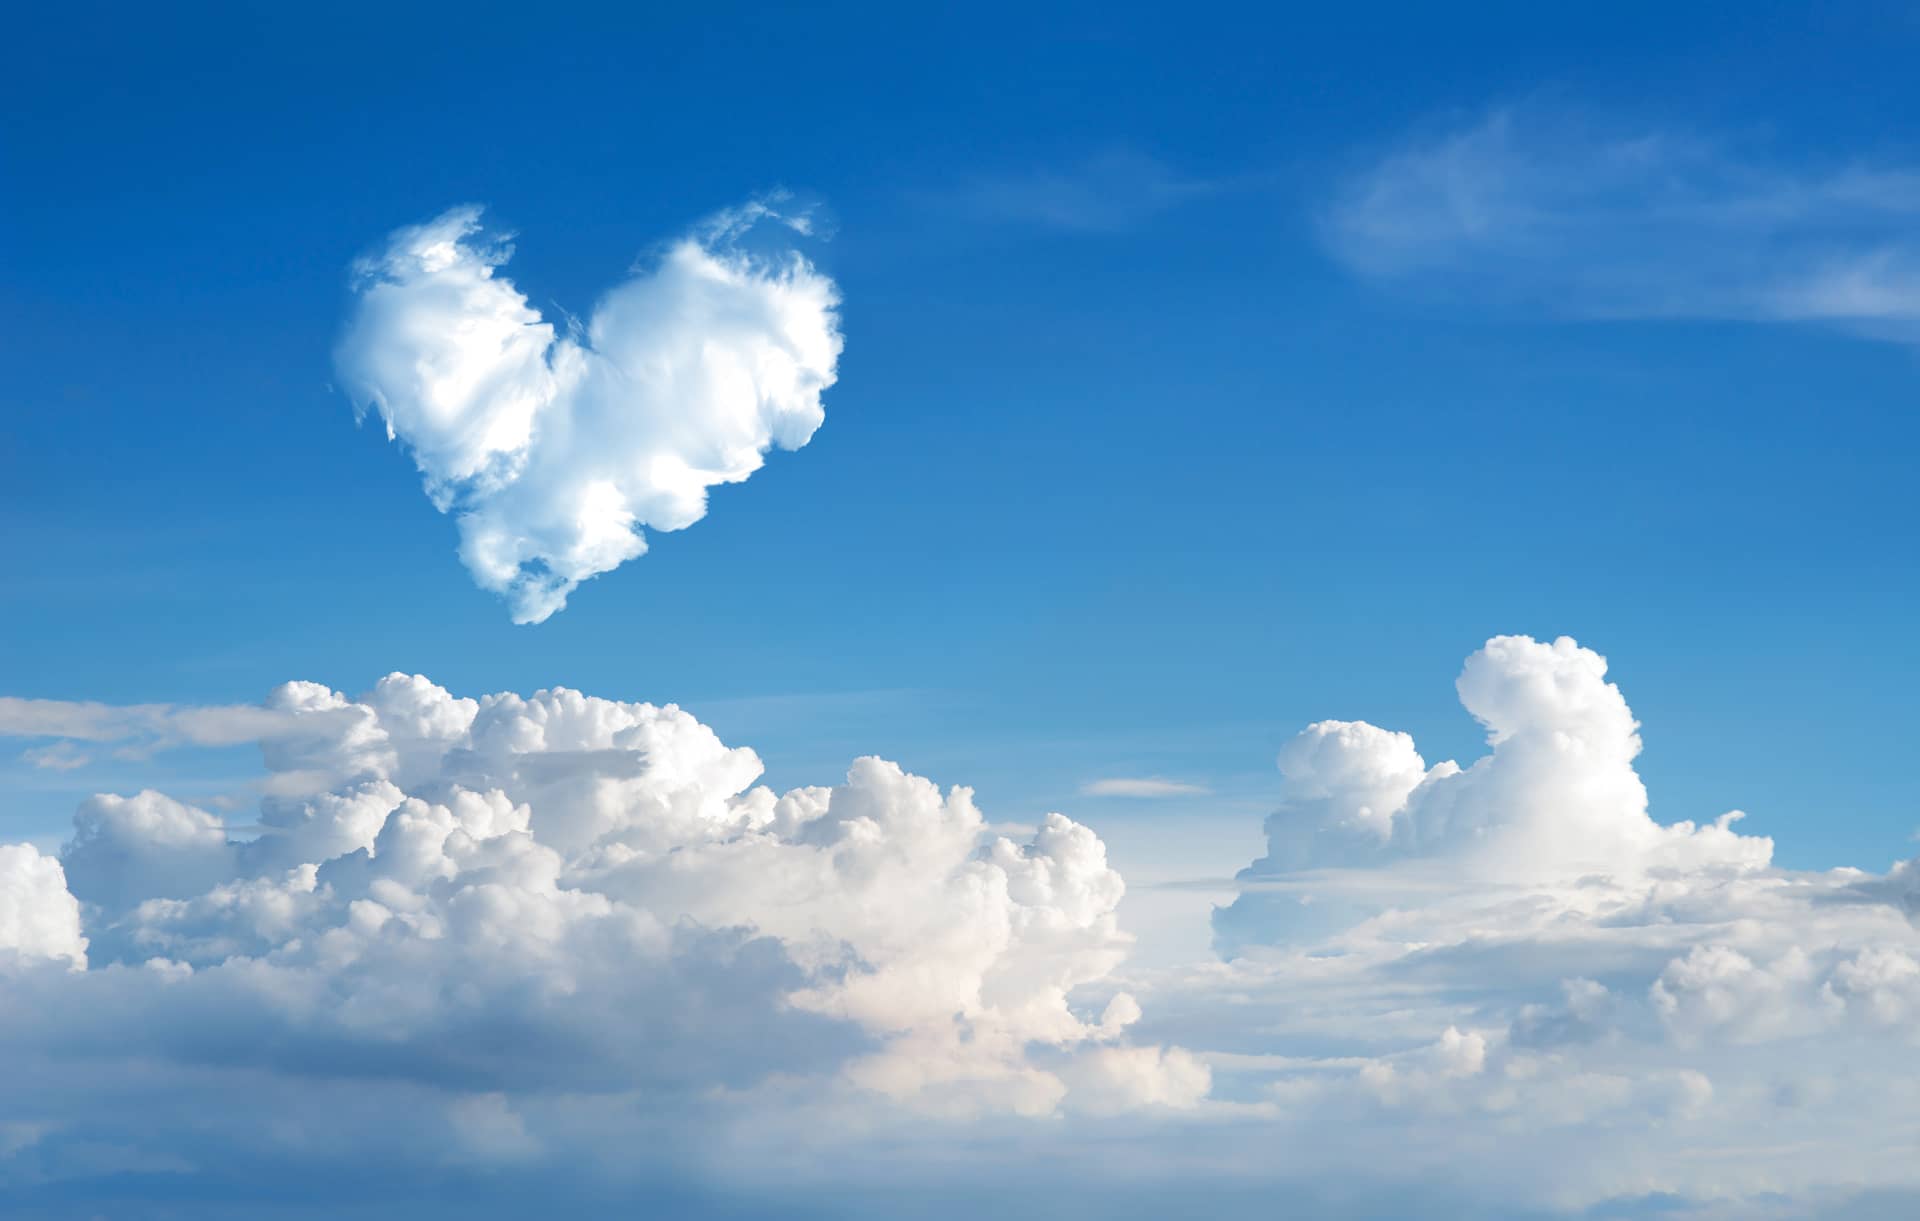 Blue profile picture romantic heart cloud abstract blue sky cloud